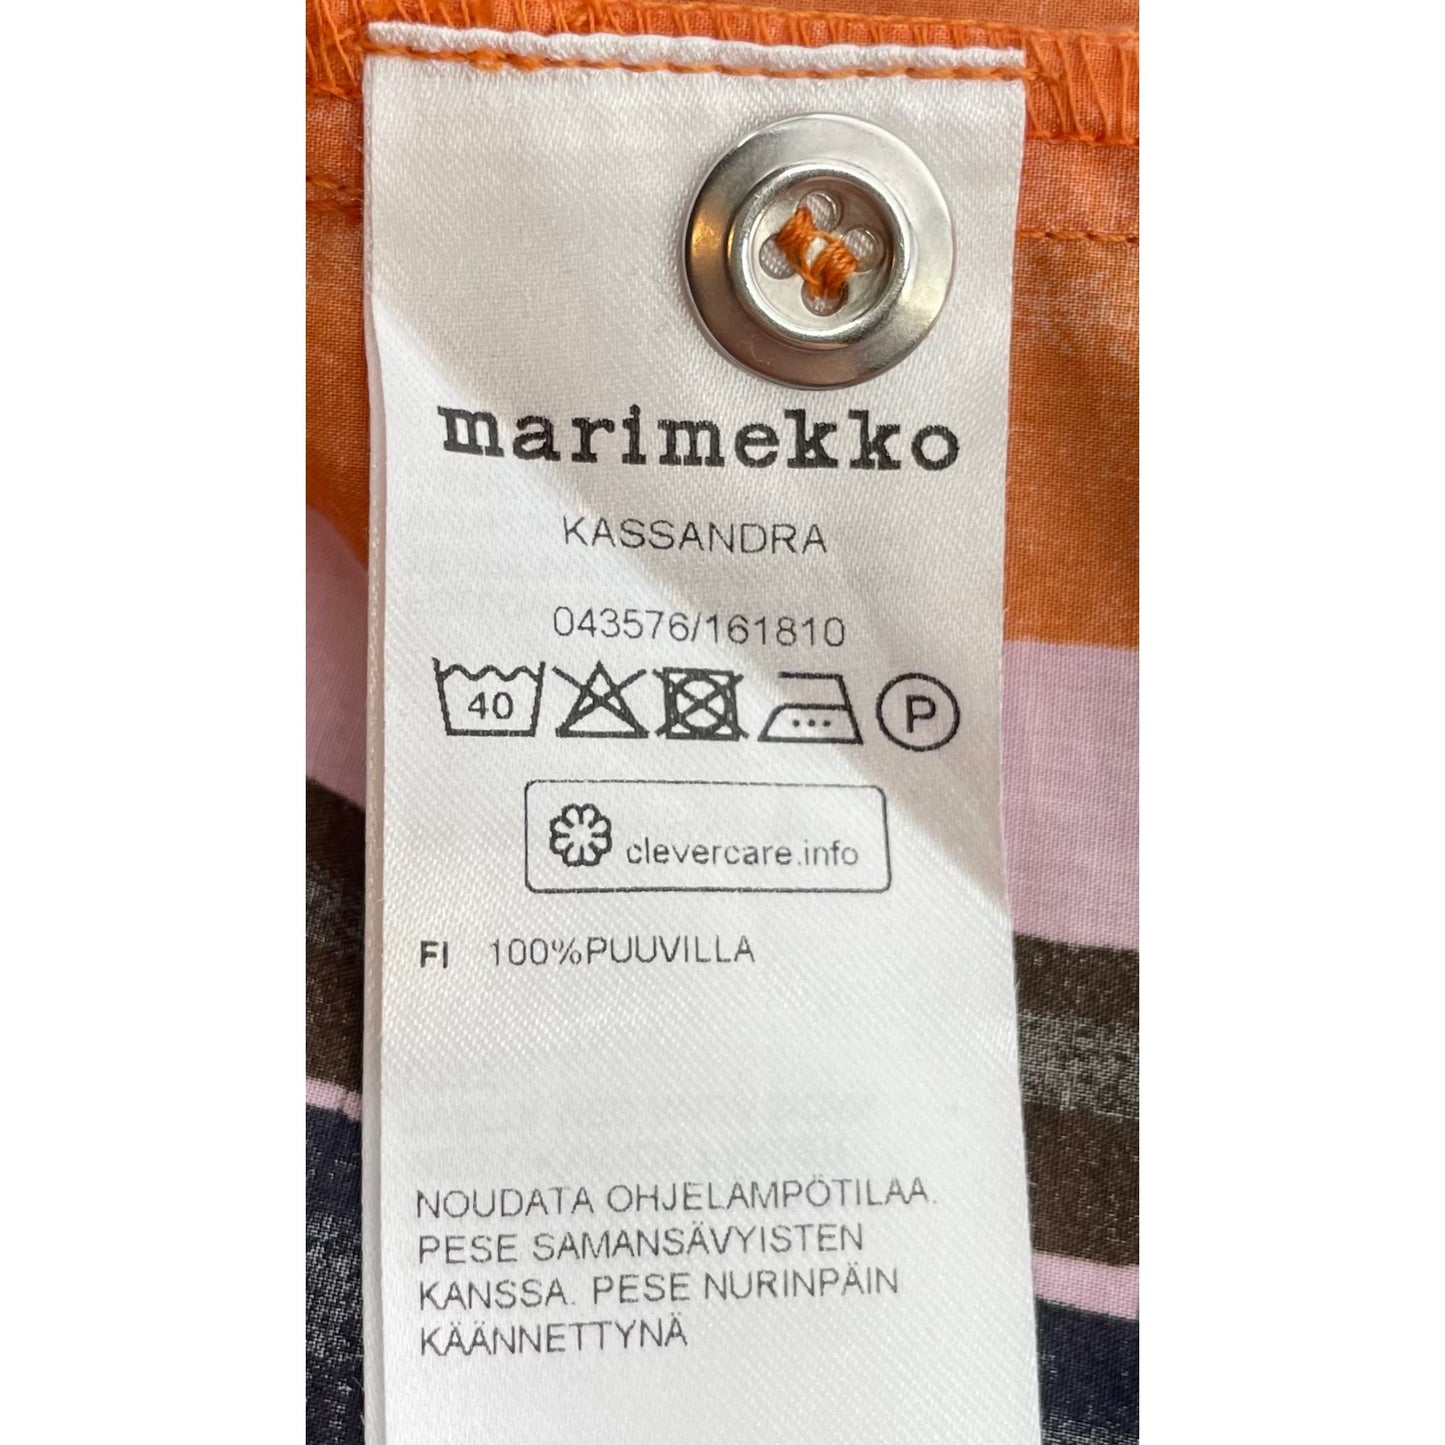 Marimekko Women's Size XS (34) Orange/Pink/Brown/Navy Striped T-Shirt Dress